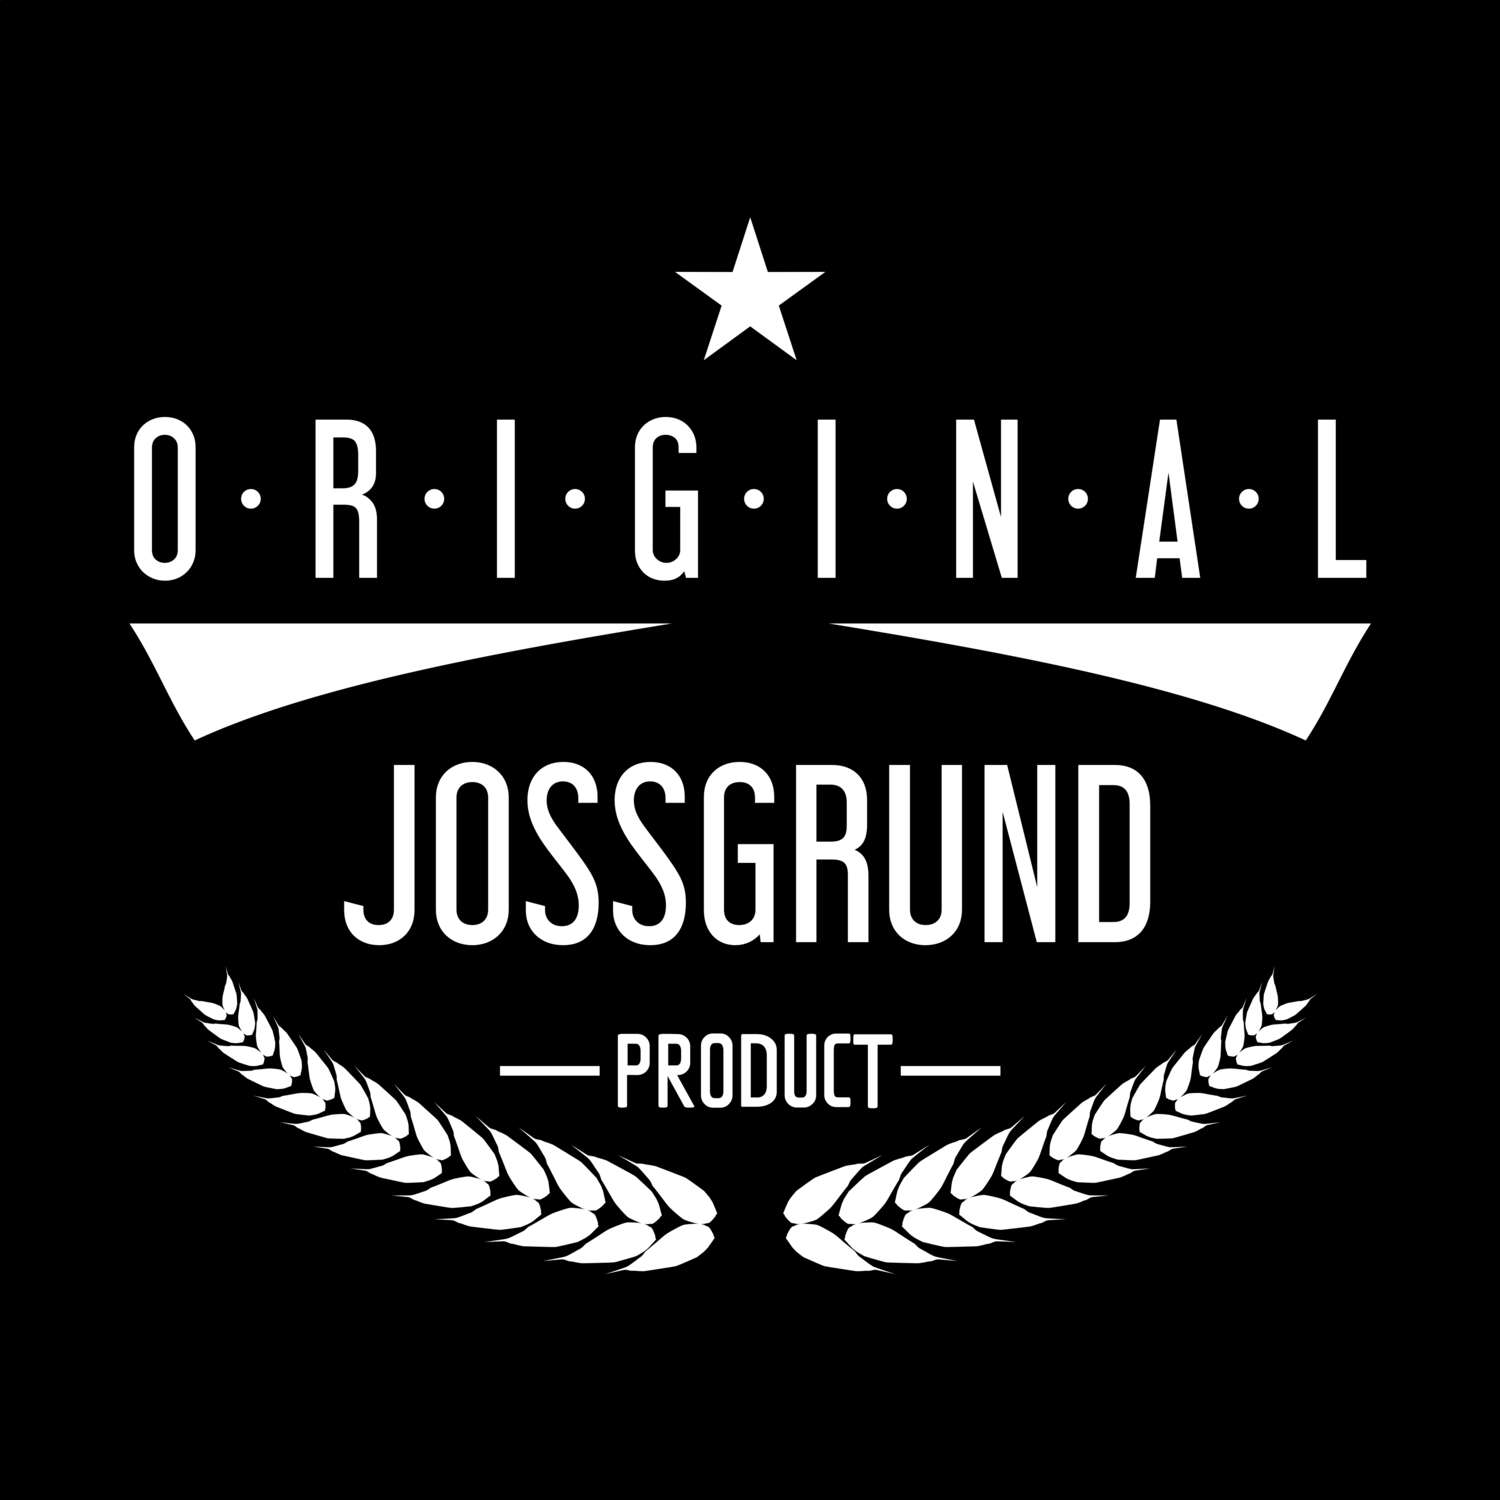 Jossgrund T-Shirt »Original Product«